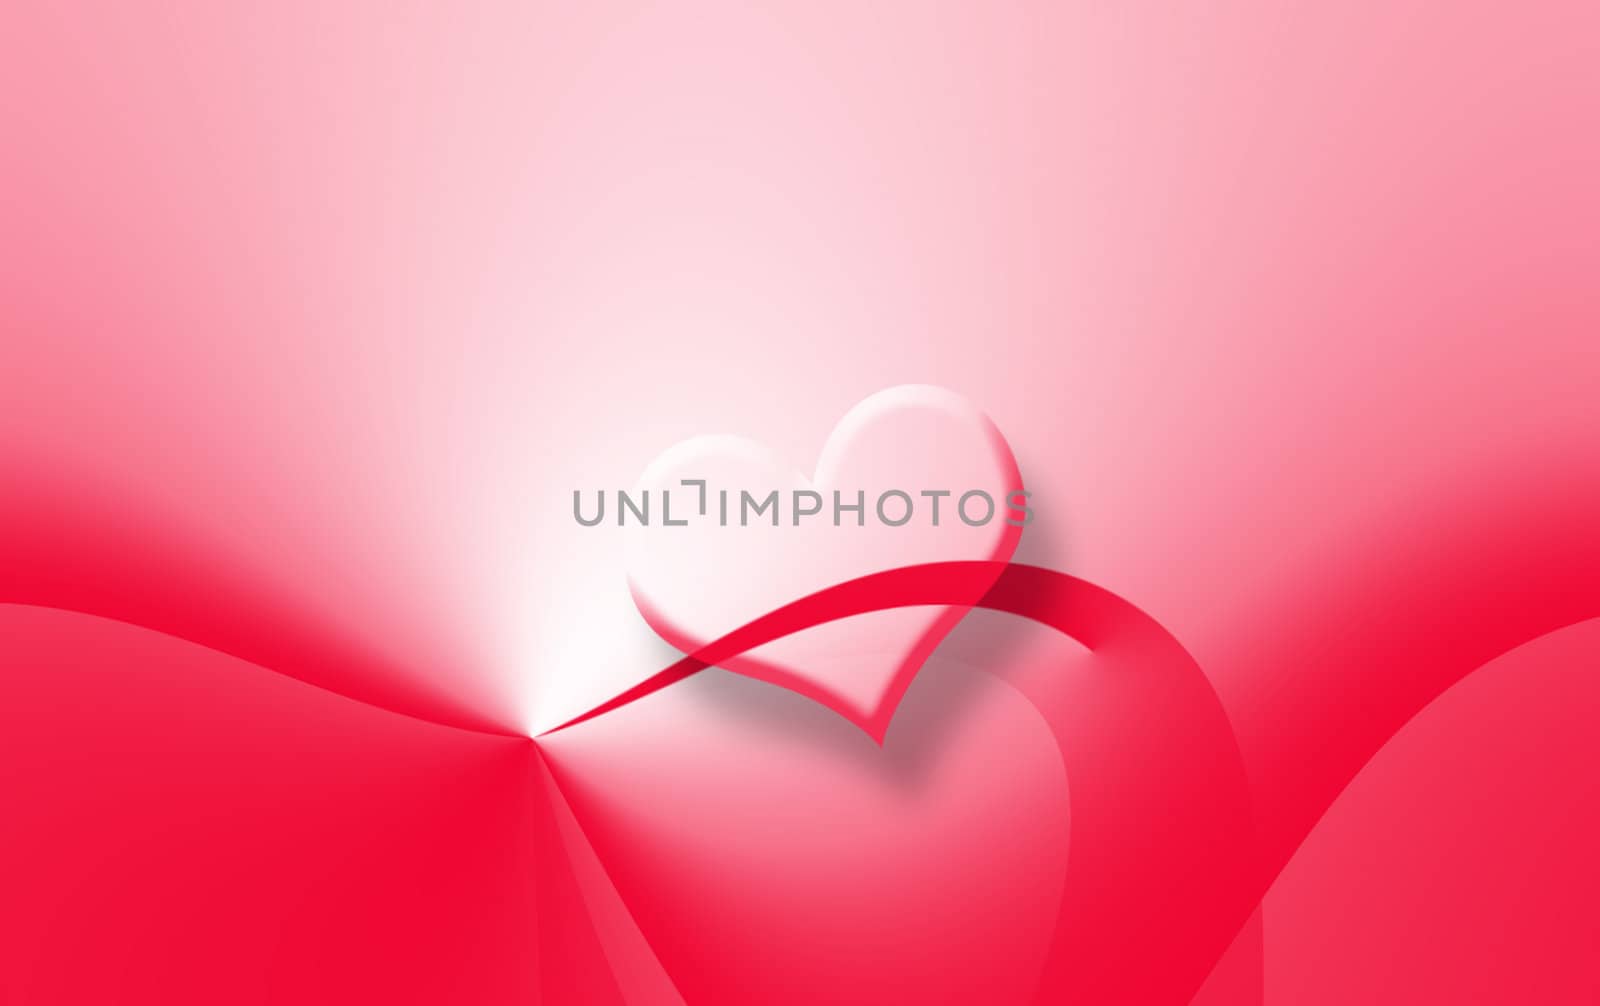 invitation background, bright red heart